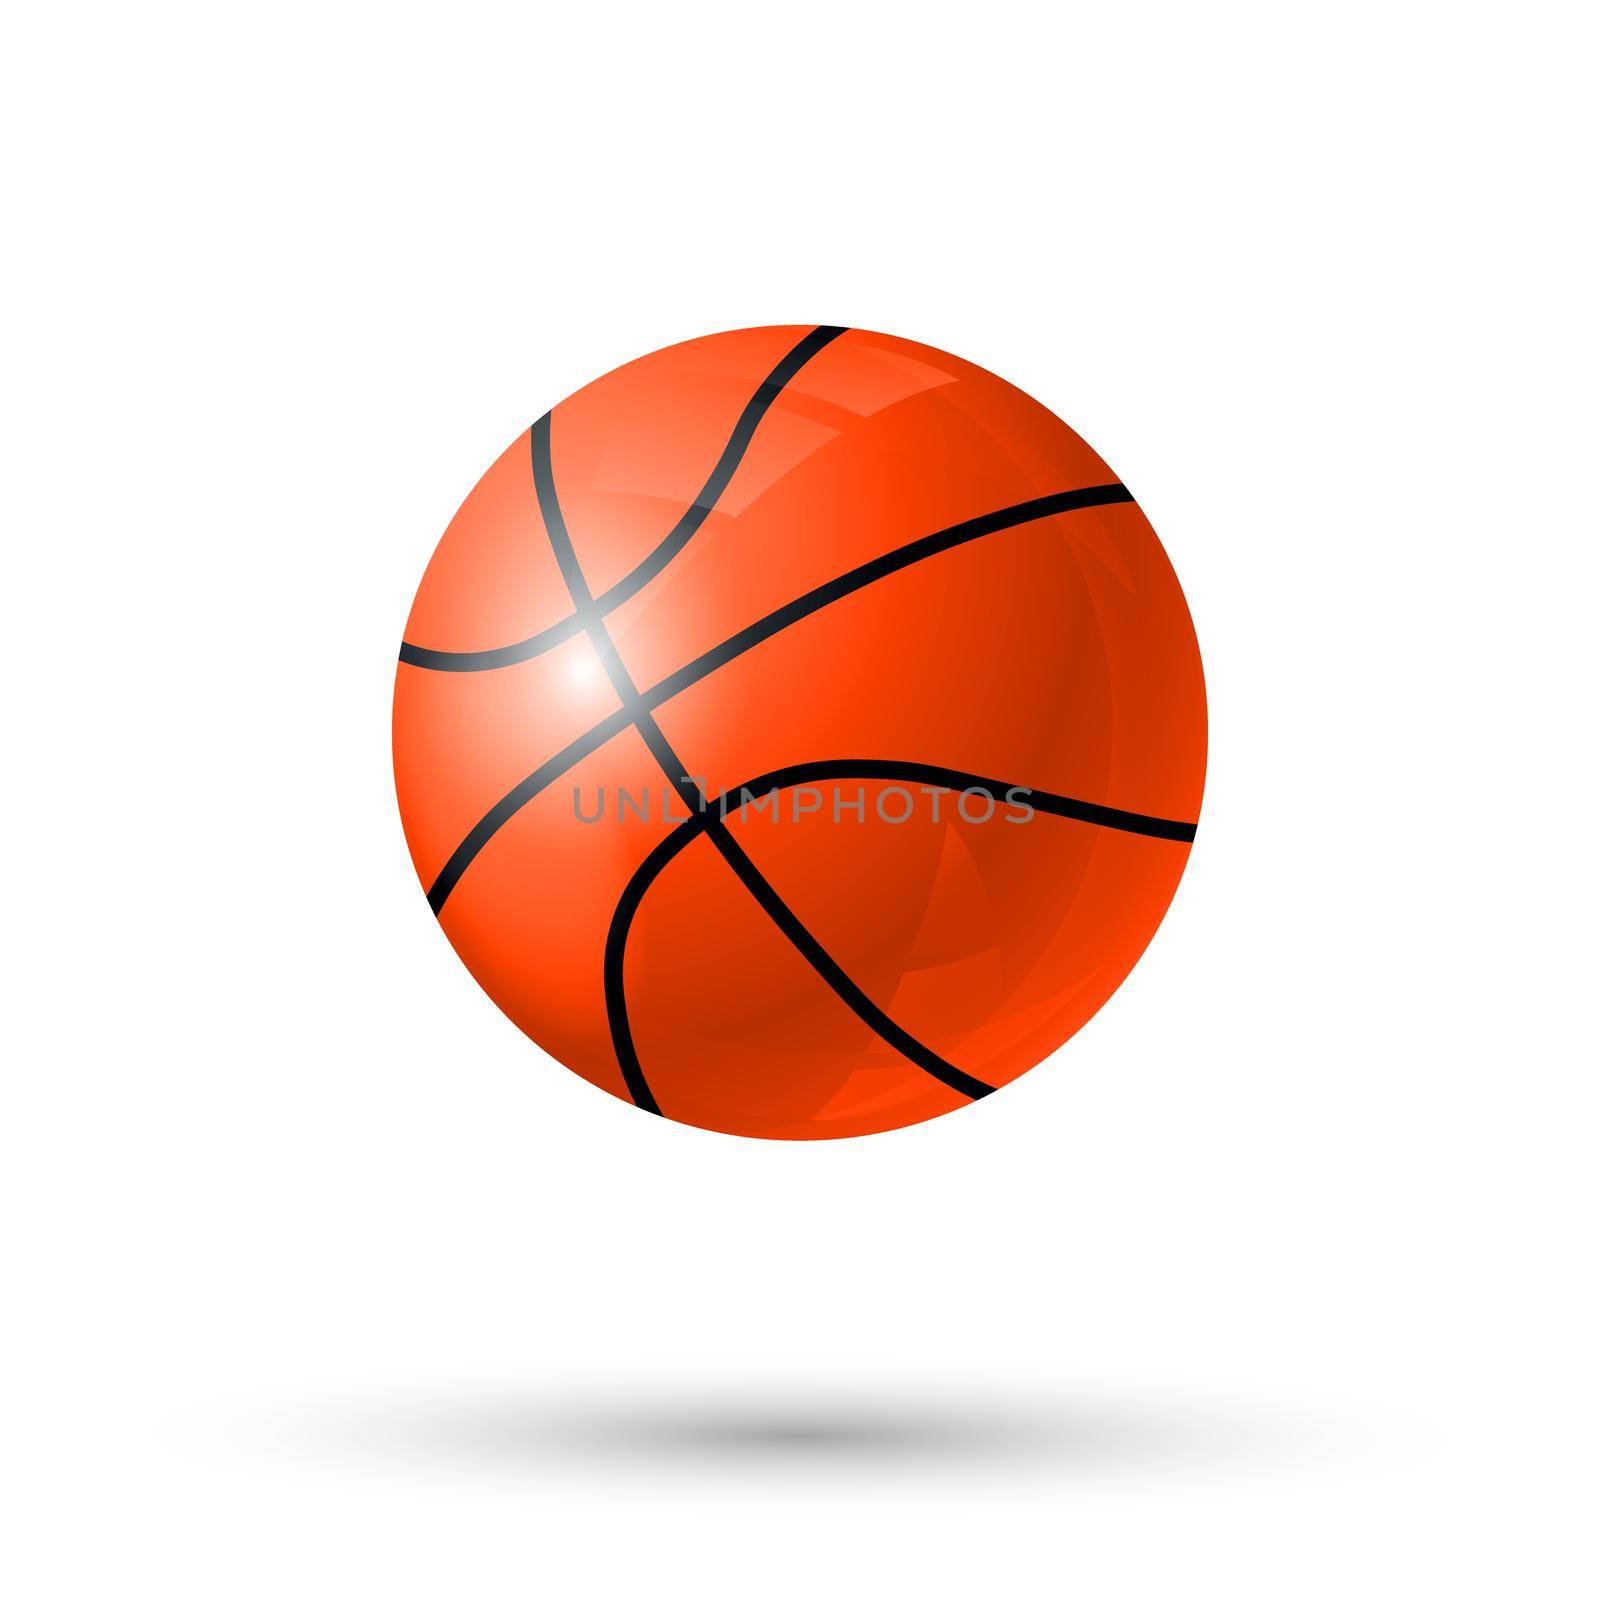 Baskettball ball isolated on white background. Vector illustration.